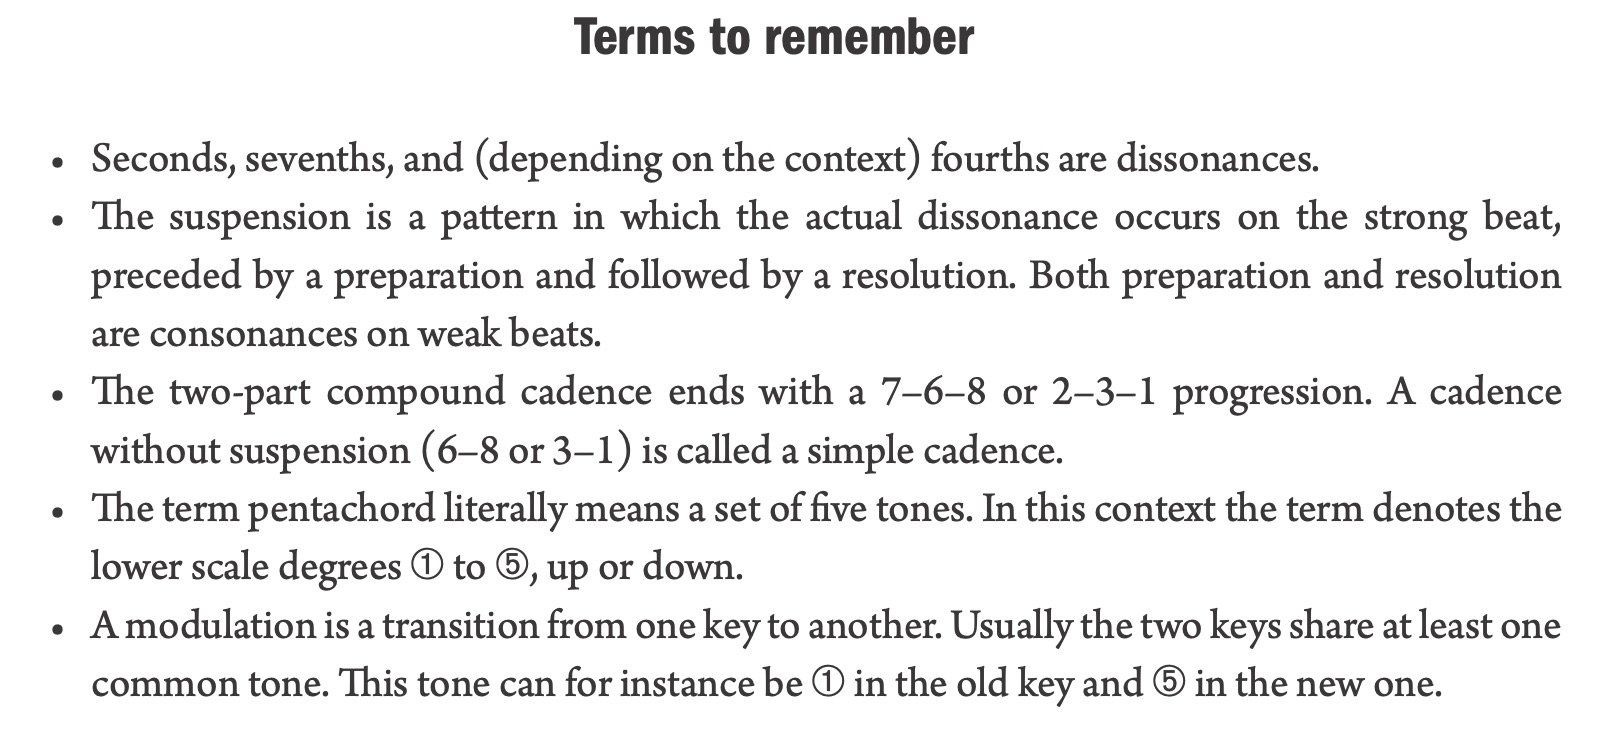 ijzerman terms to remember 1.3.jpg